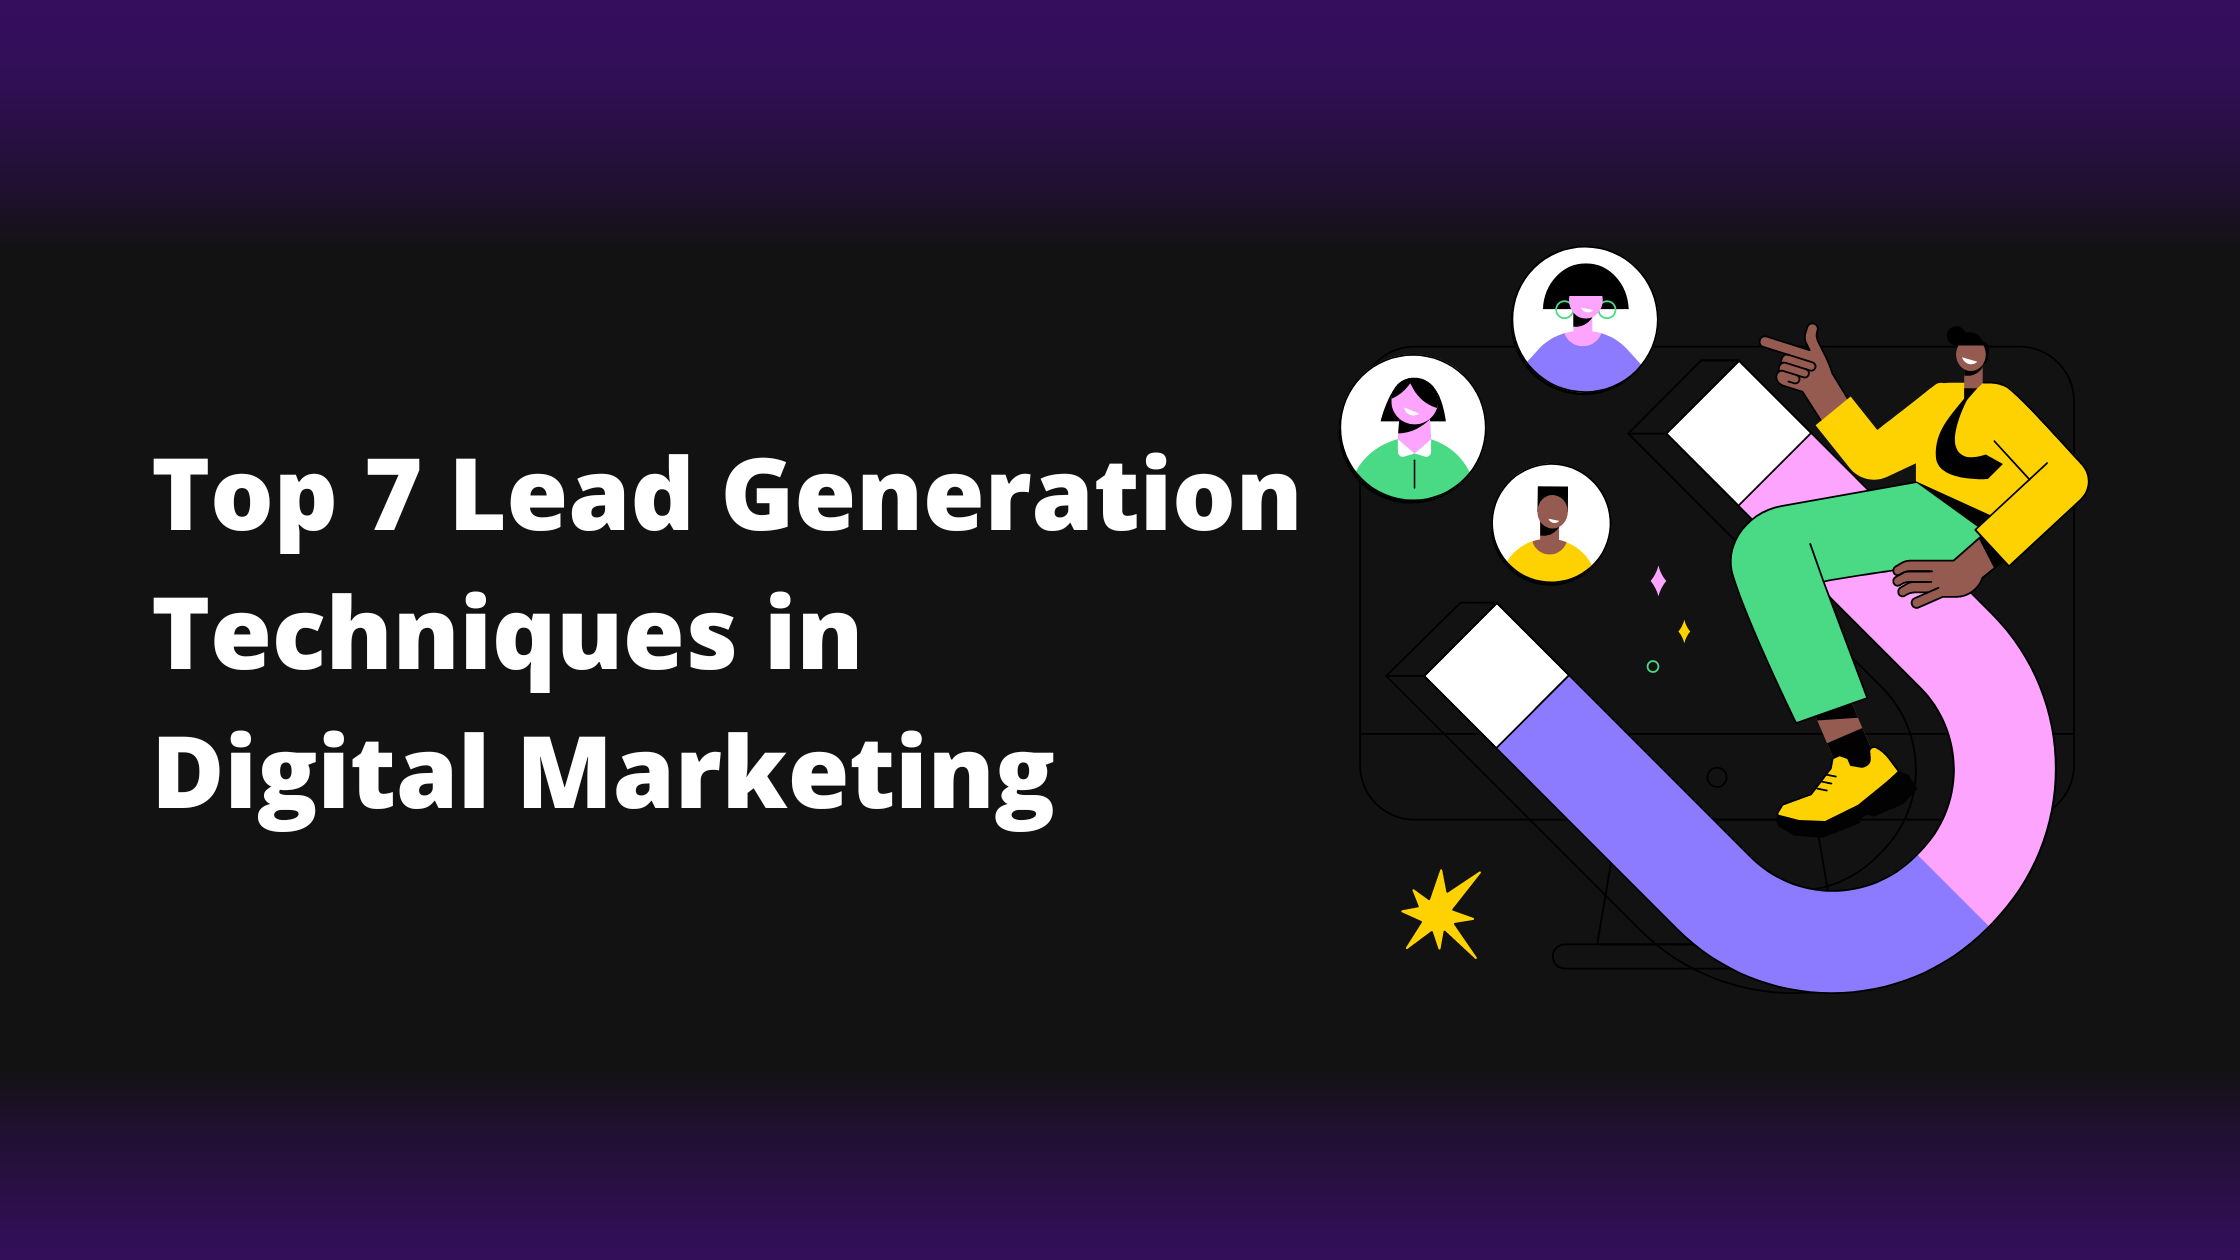 Top 7 Lead Generation Techniques in Digital Marketing